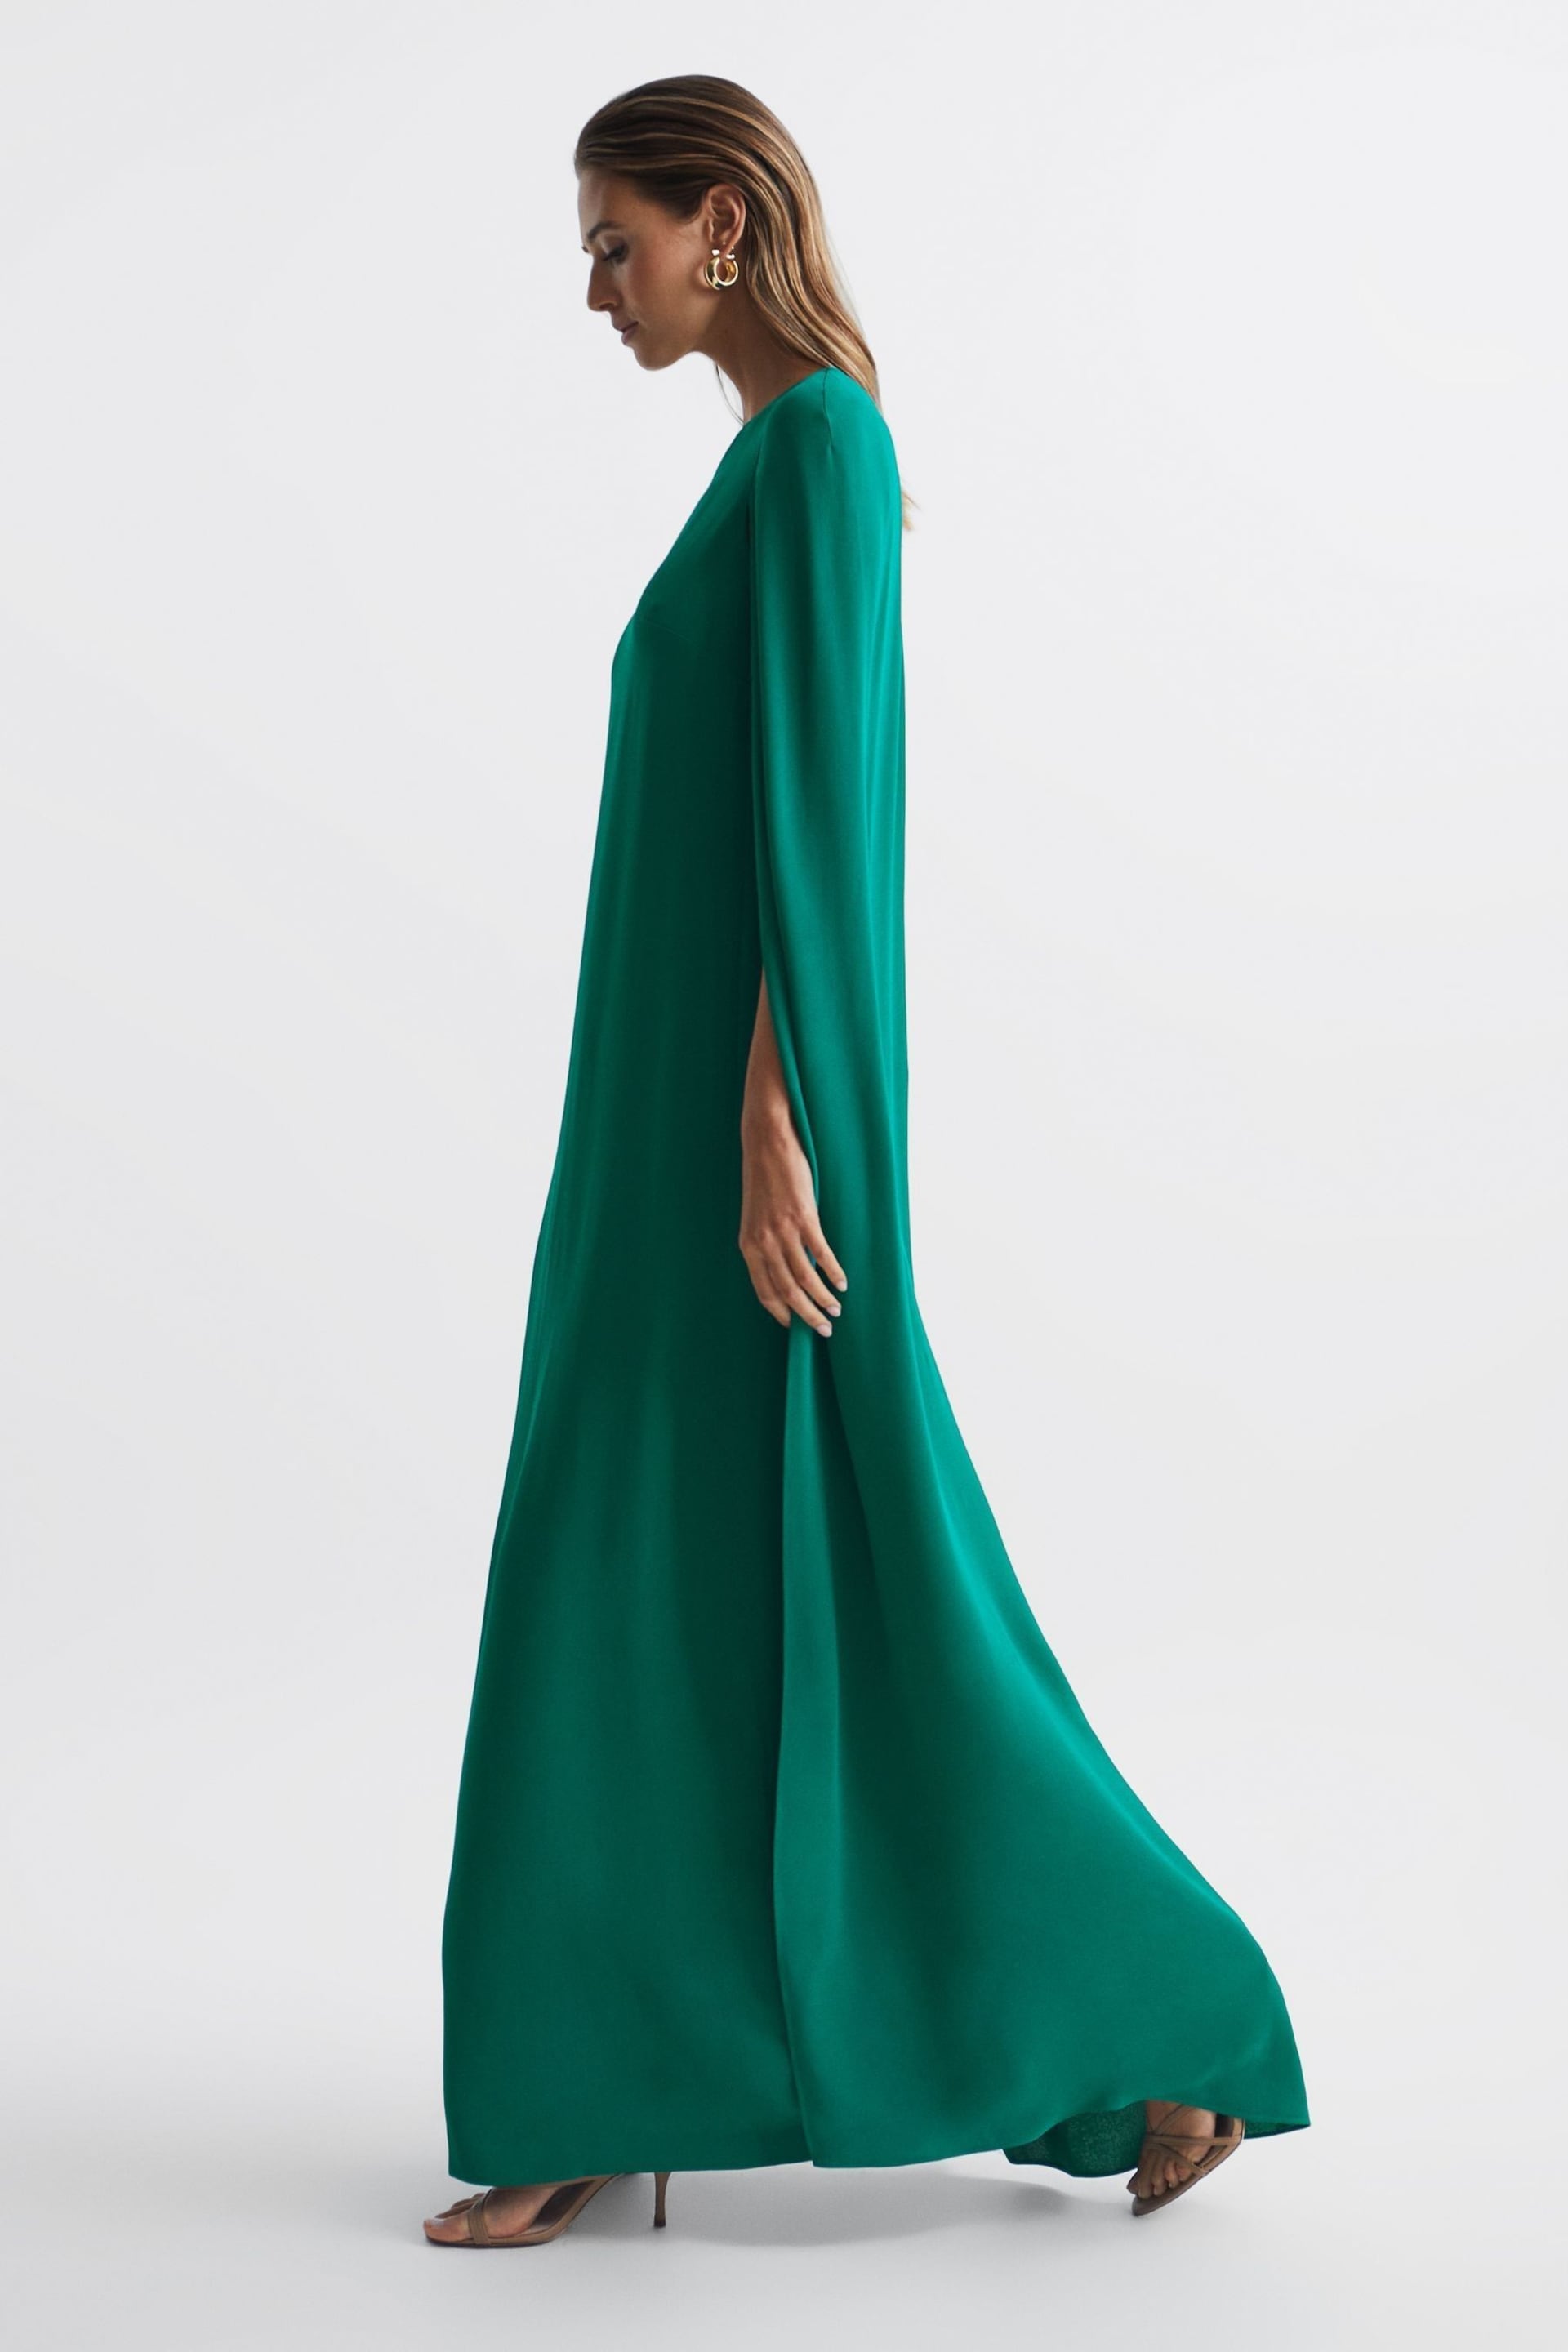 Reiss Green Nina Cape One Shoulder Maxi Dress - Image 6 of 6